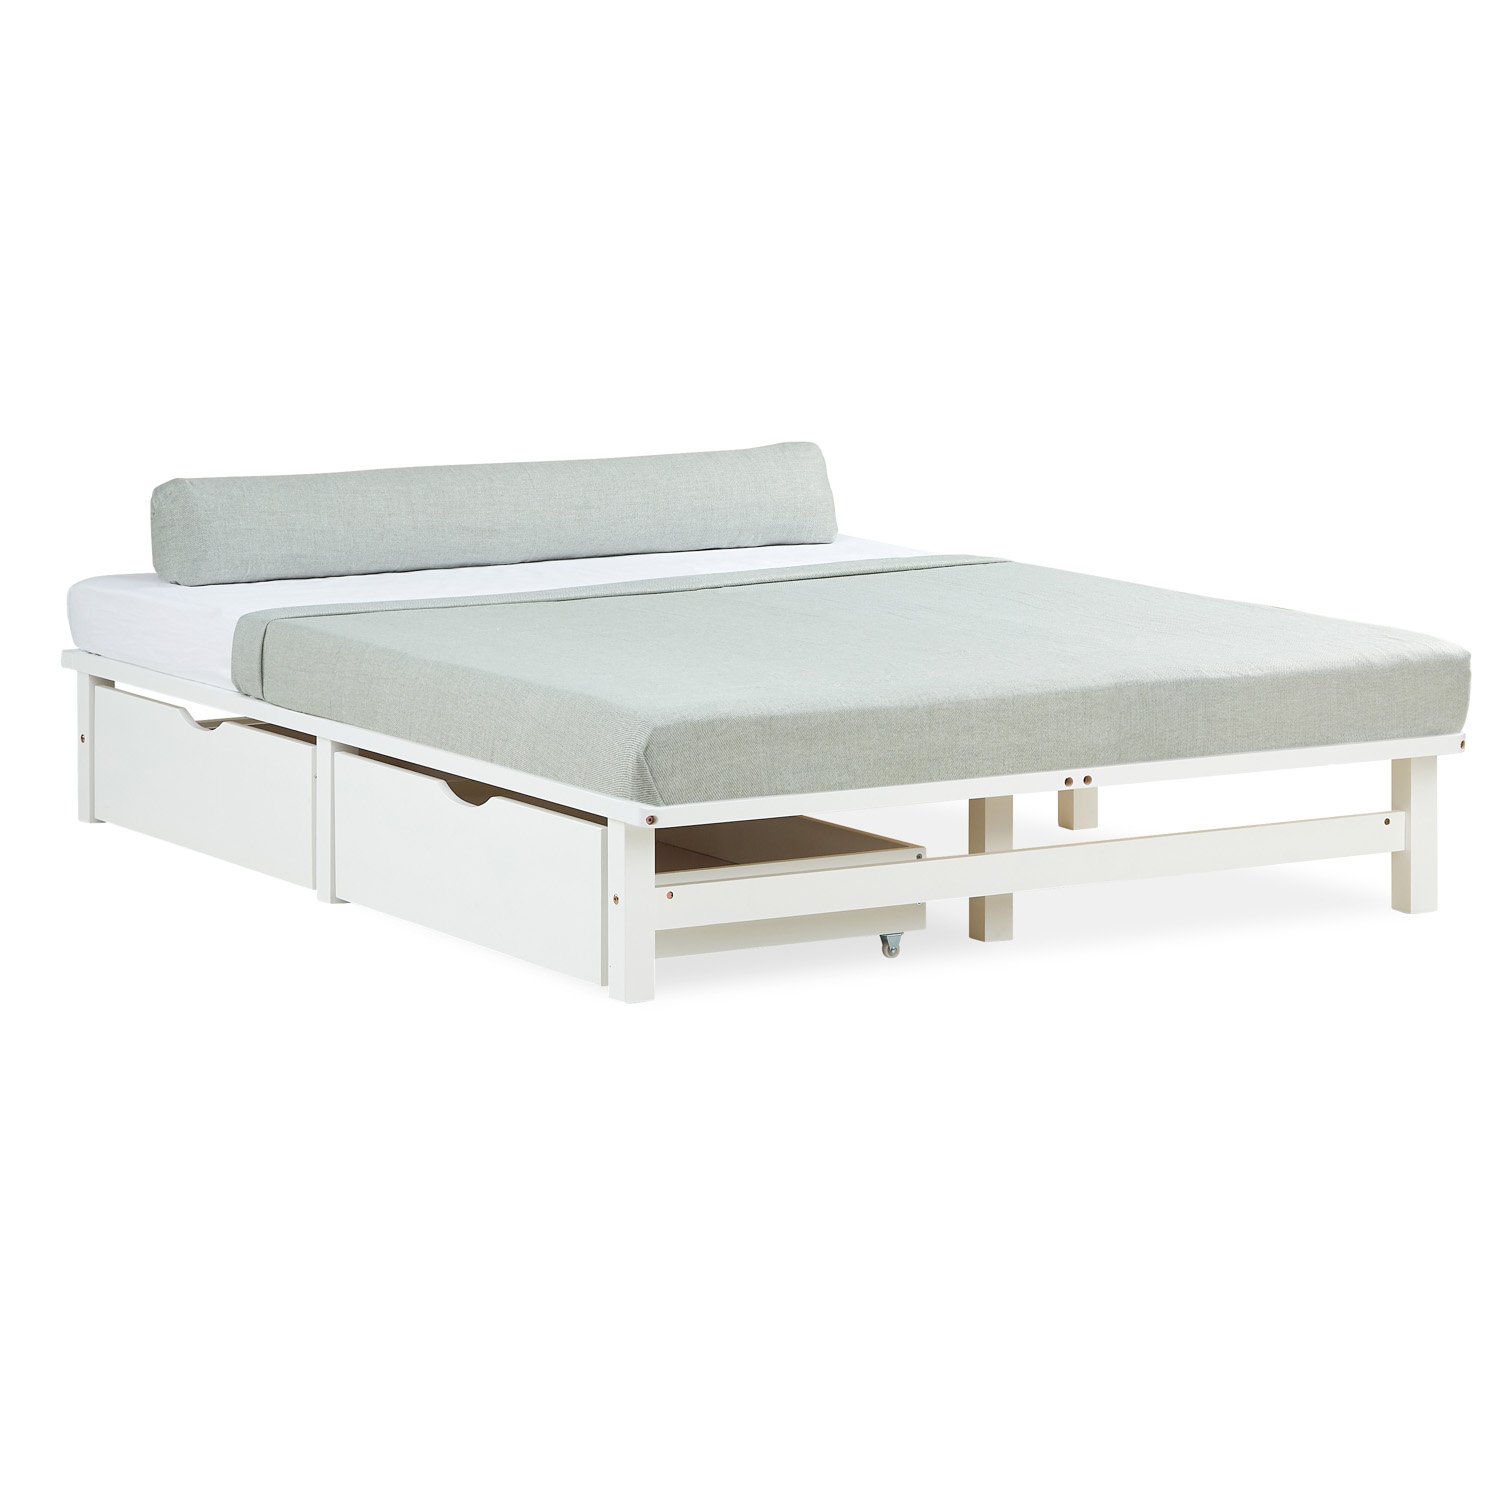 Palettenbett 140x200 cm mit Bettkasten 2er Set Lattenrost Holzbett Weiß Palettenmöbel Bett